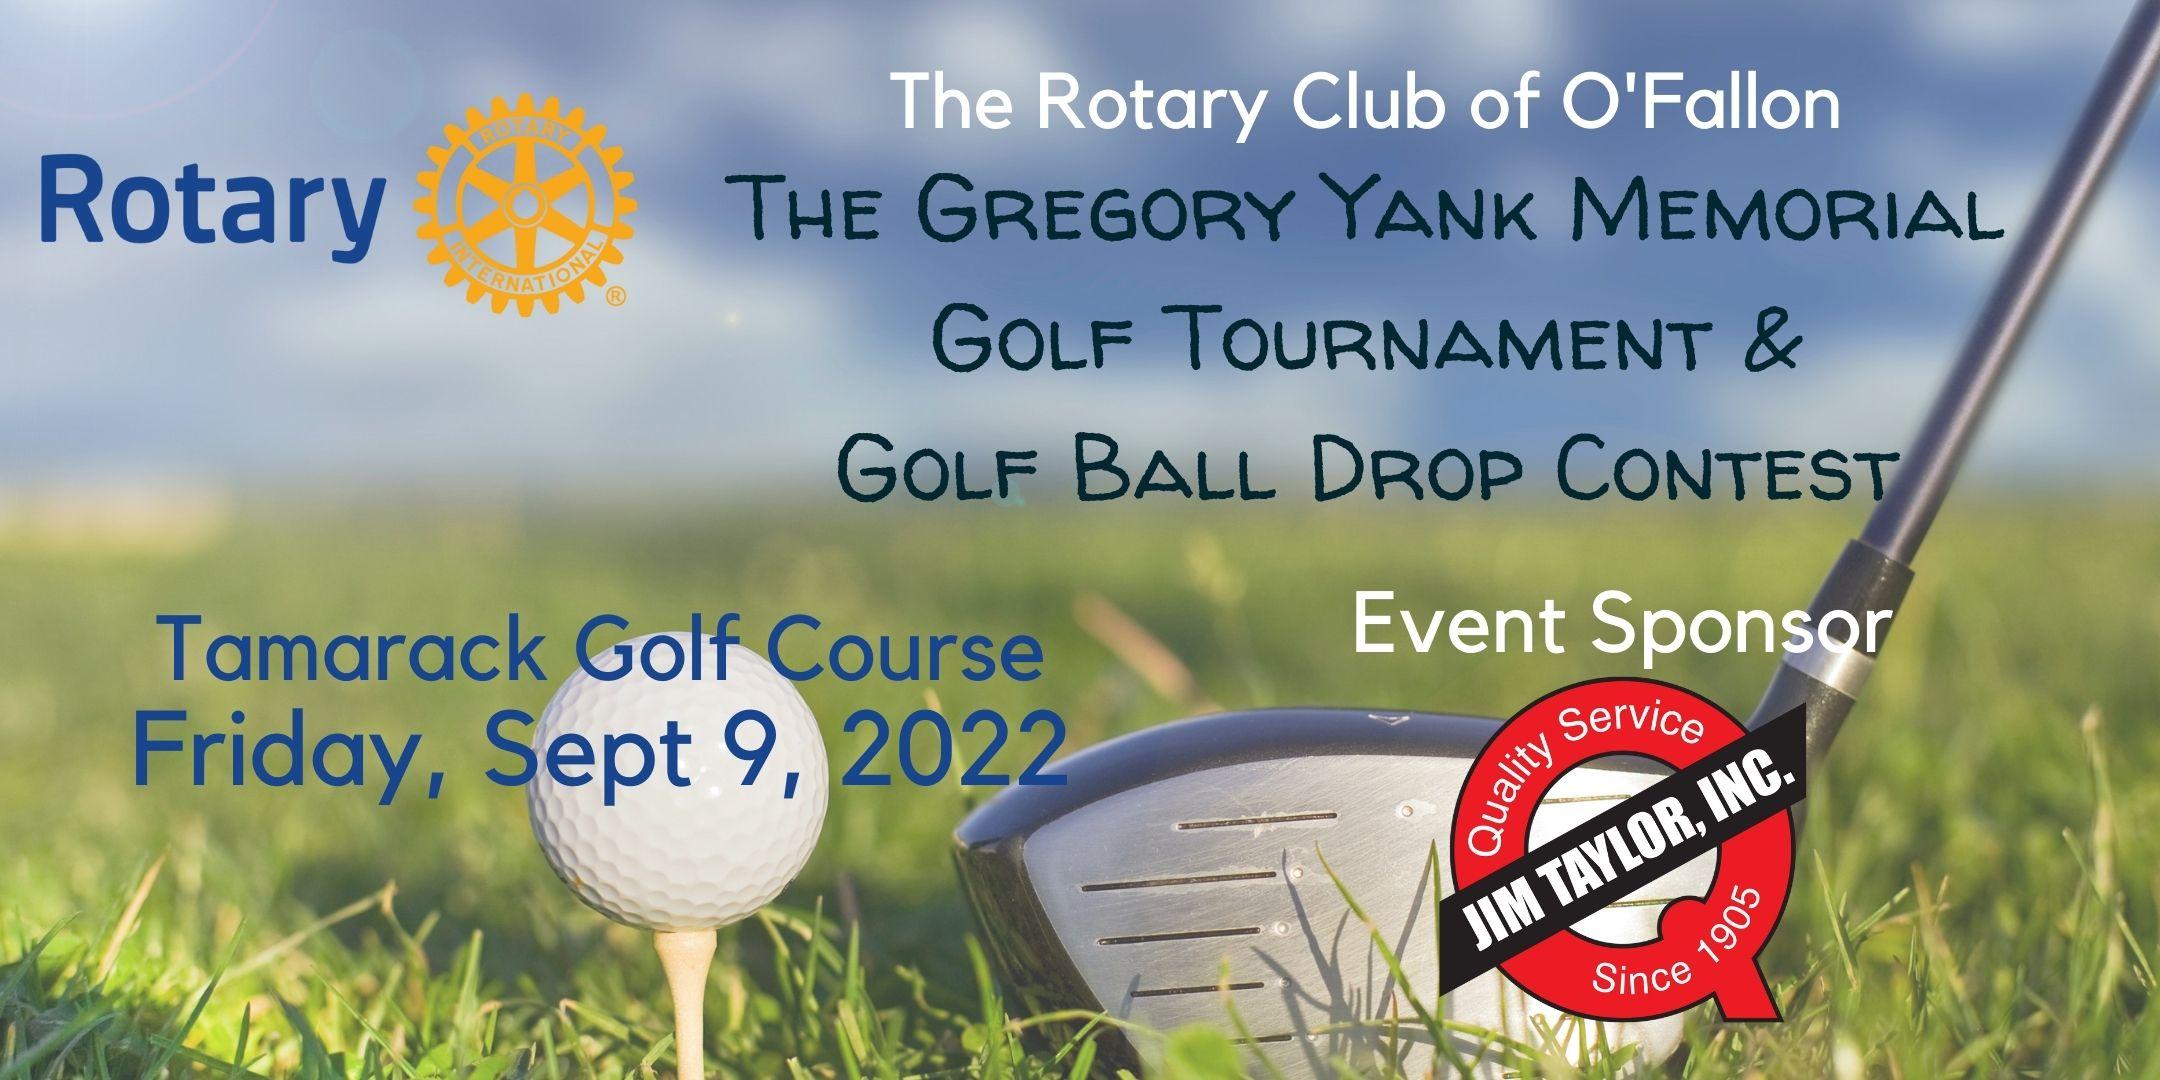 The Gregory Yank Memorial Golf Tournament